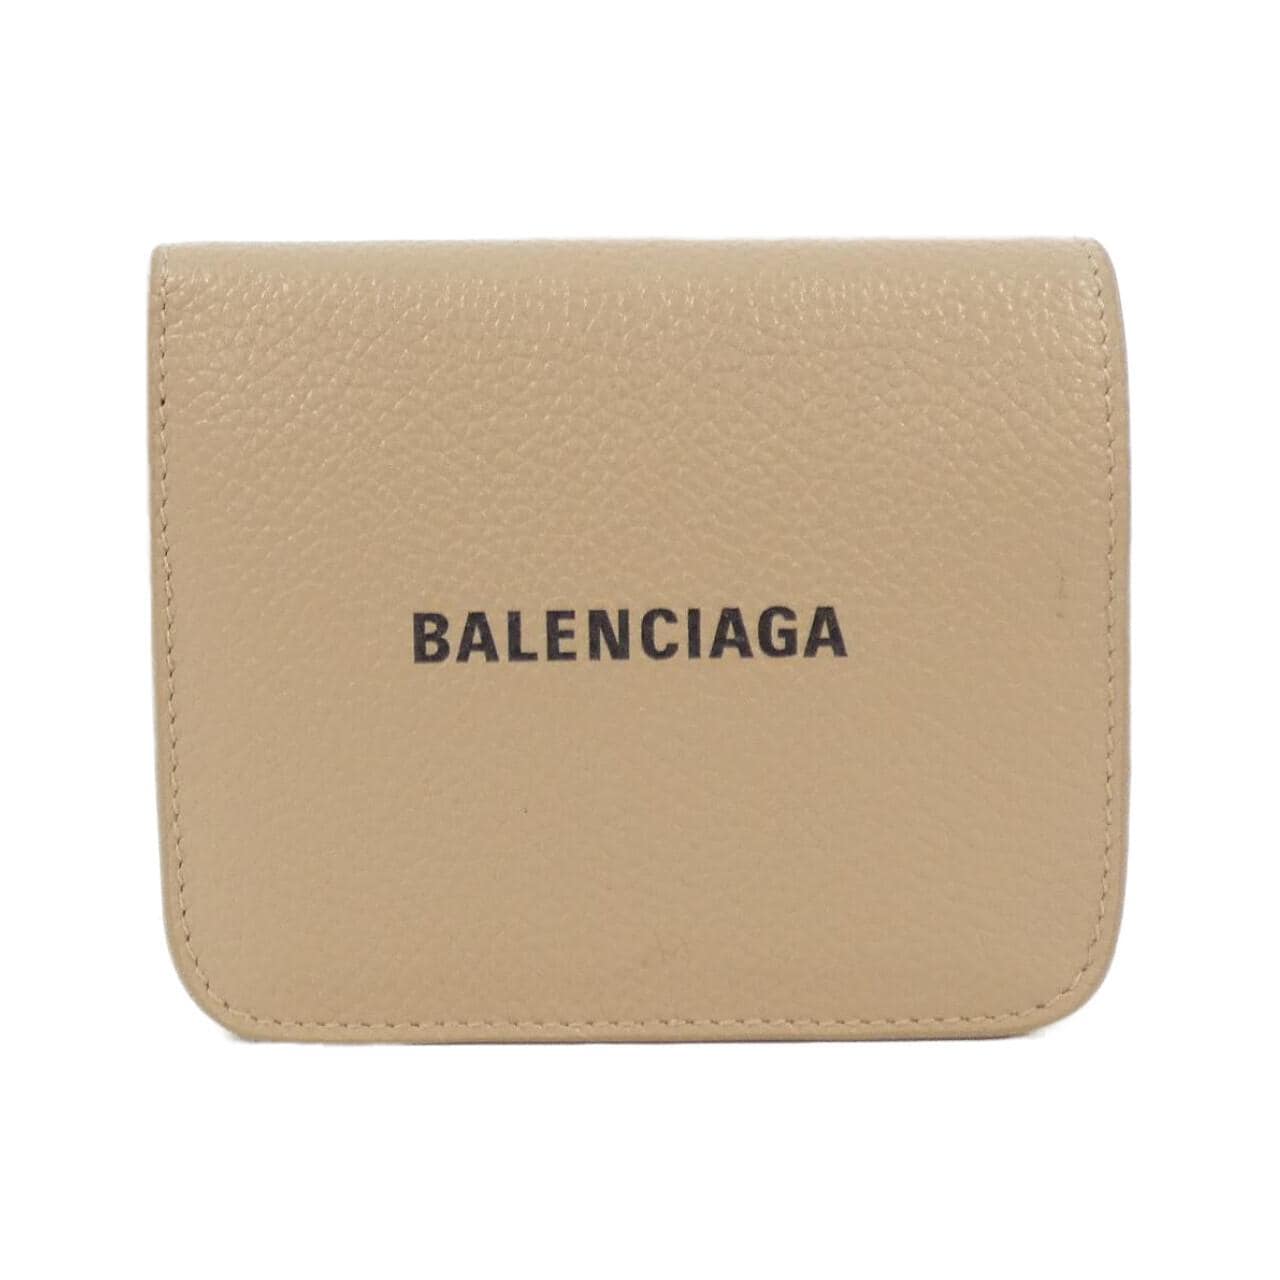 [BRAND NEW] BALENCIAGA Cash Flap Coin &amp; Card Holder 594216 1IZI3 Wallet